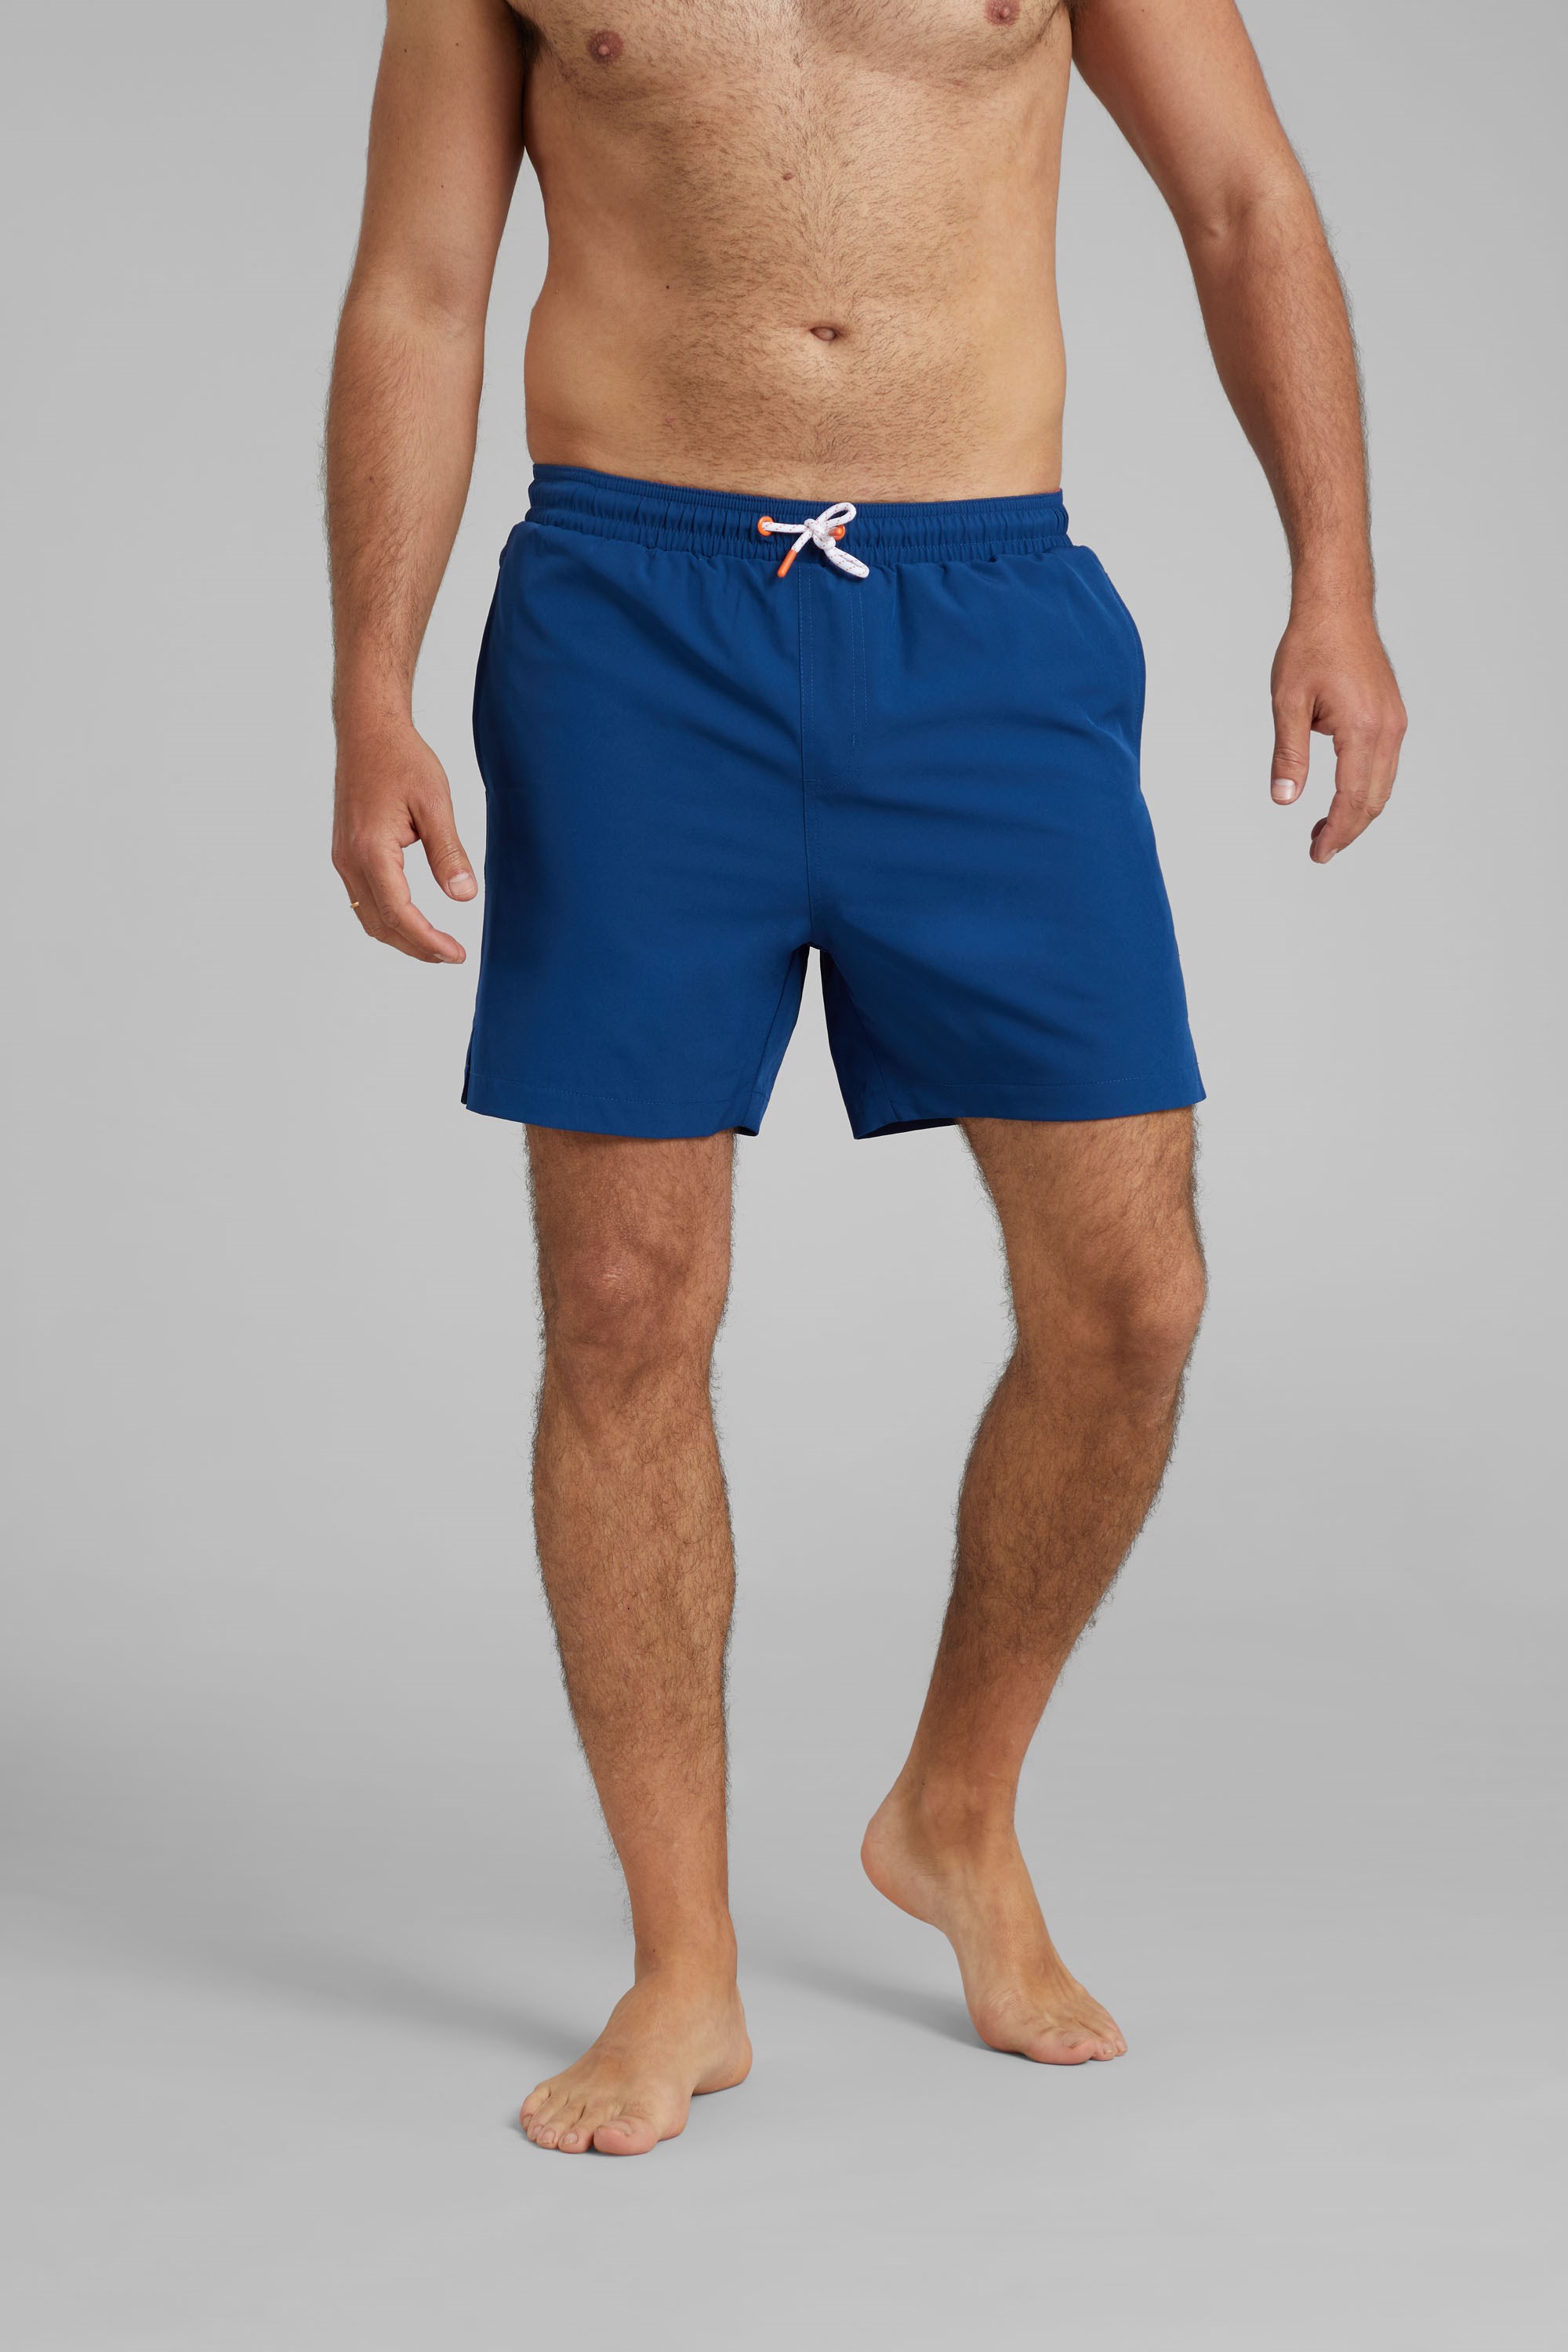 Atlantic Mens Recycled Swim Shorts - Dark Blue